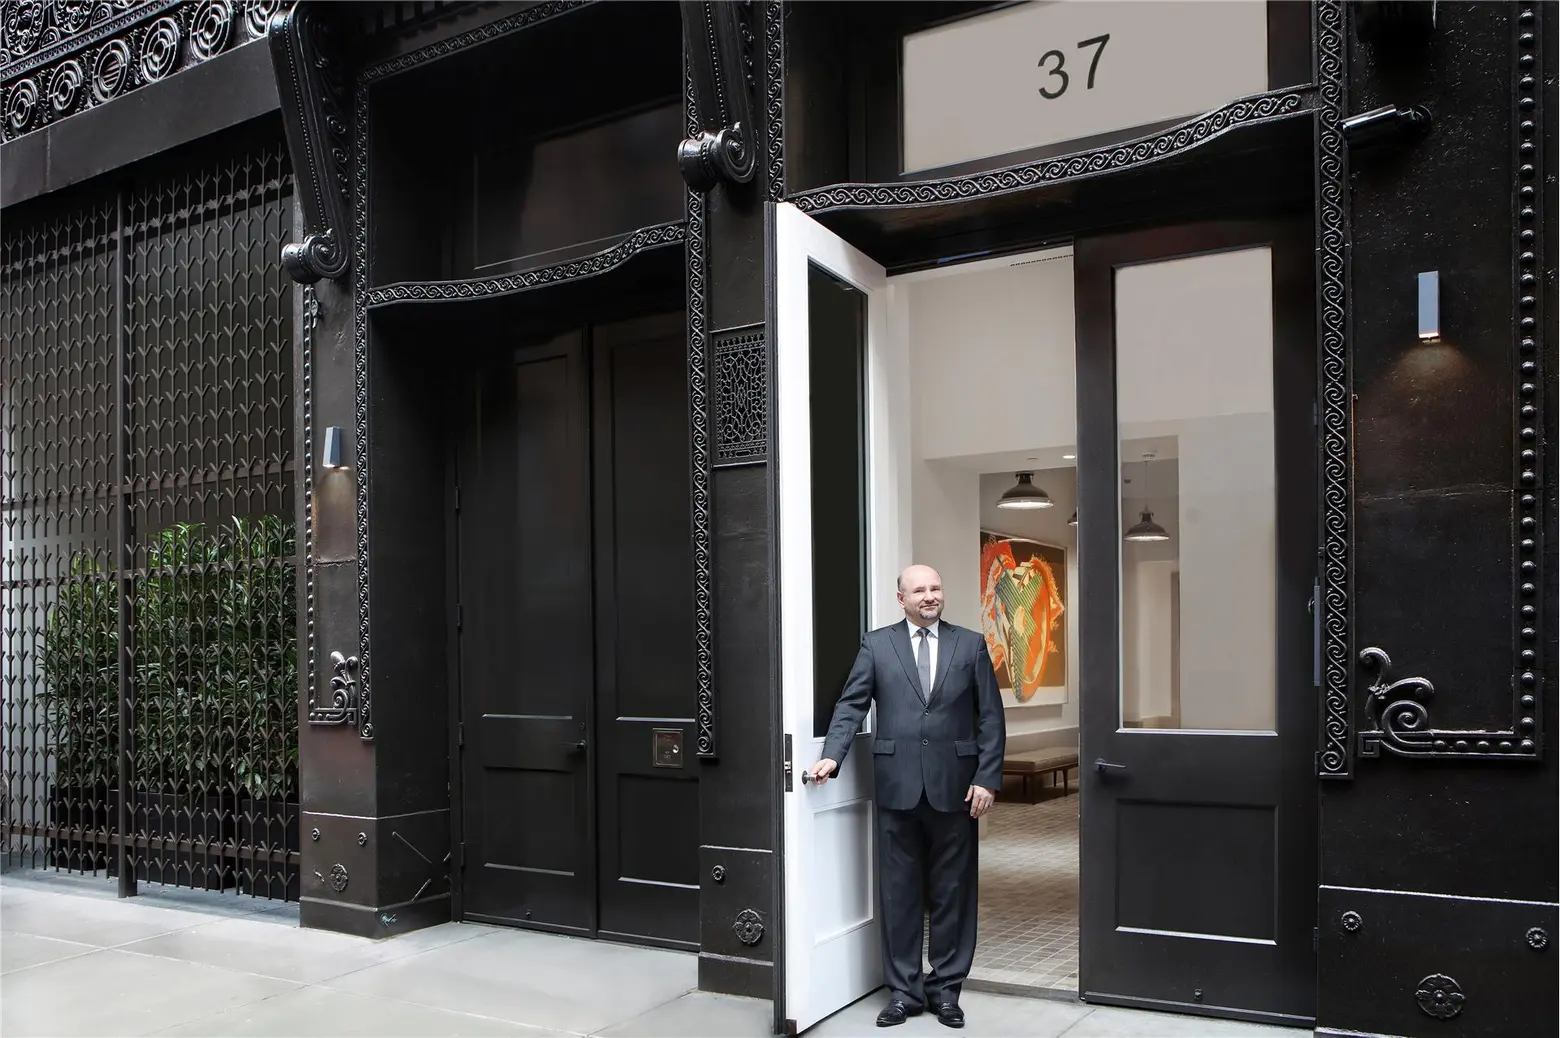 37 East 12th Street, Ashley Olsen, Greenwich Village condos, NYC celebrity real estate